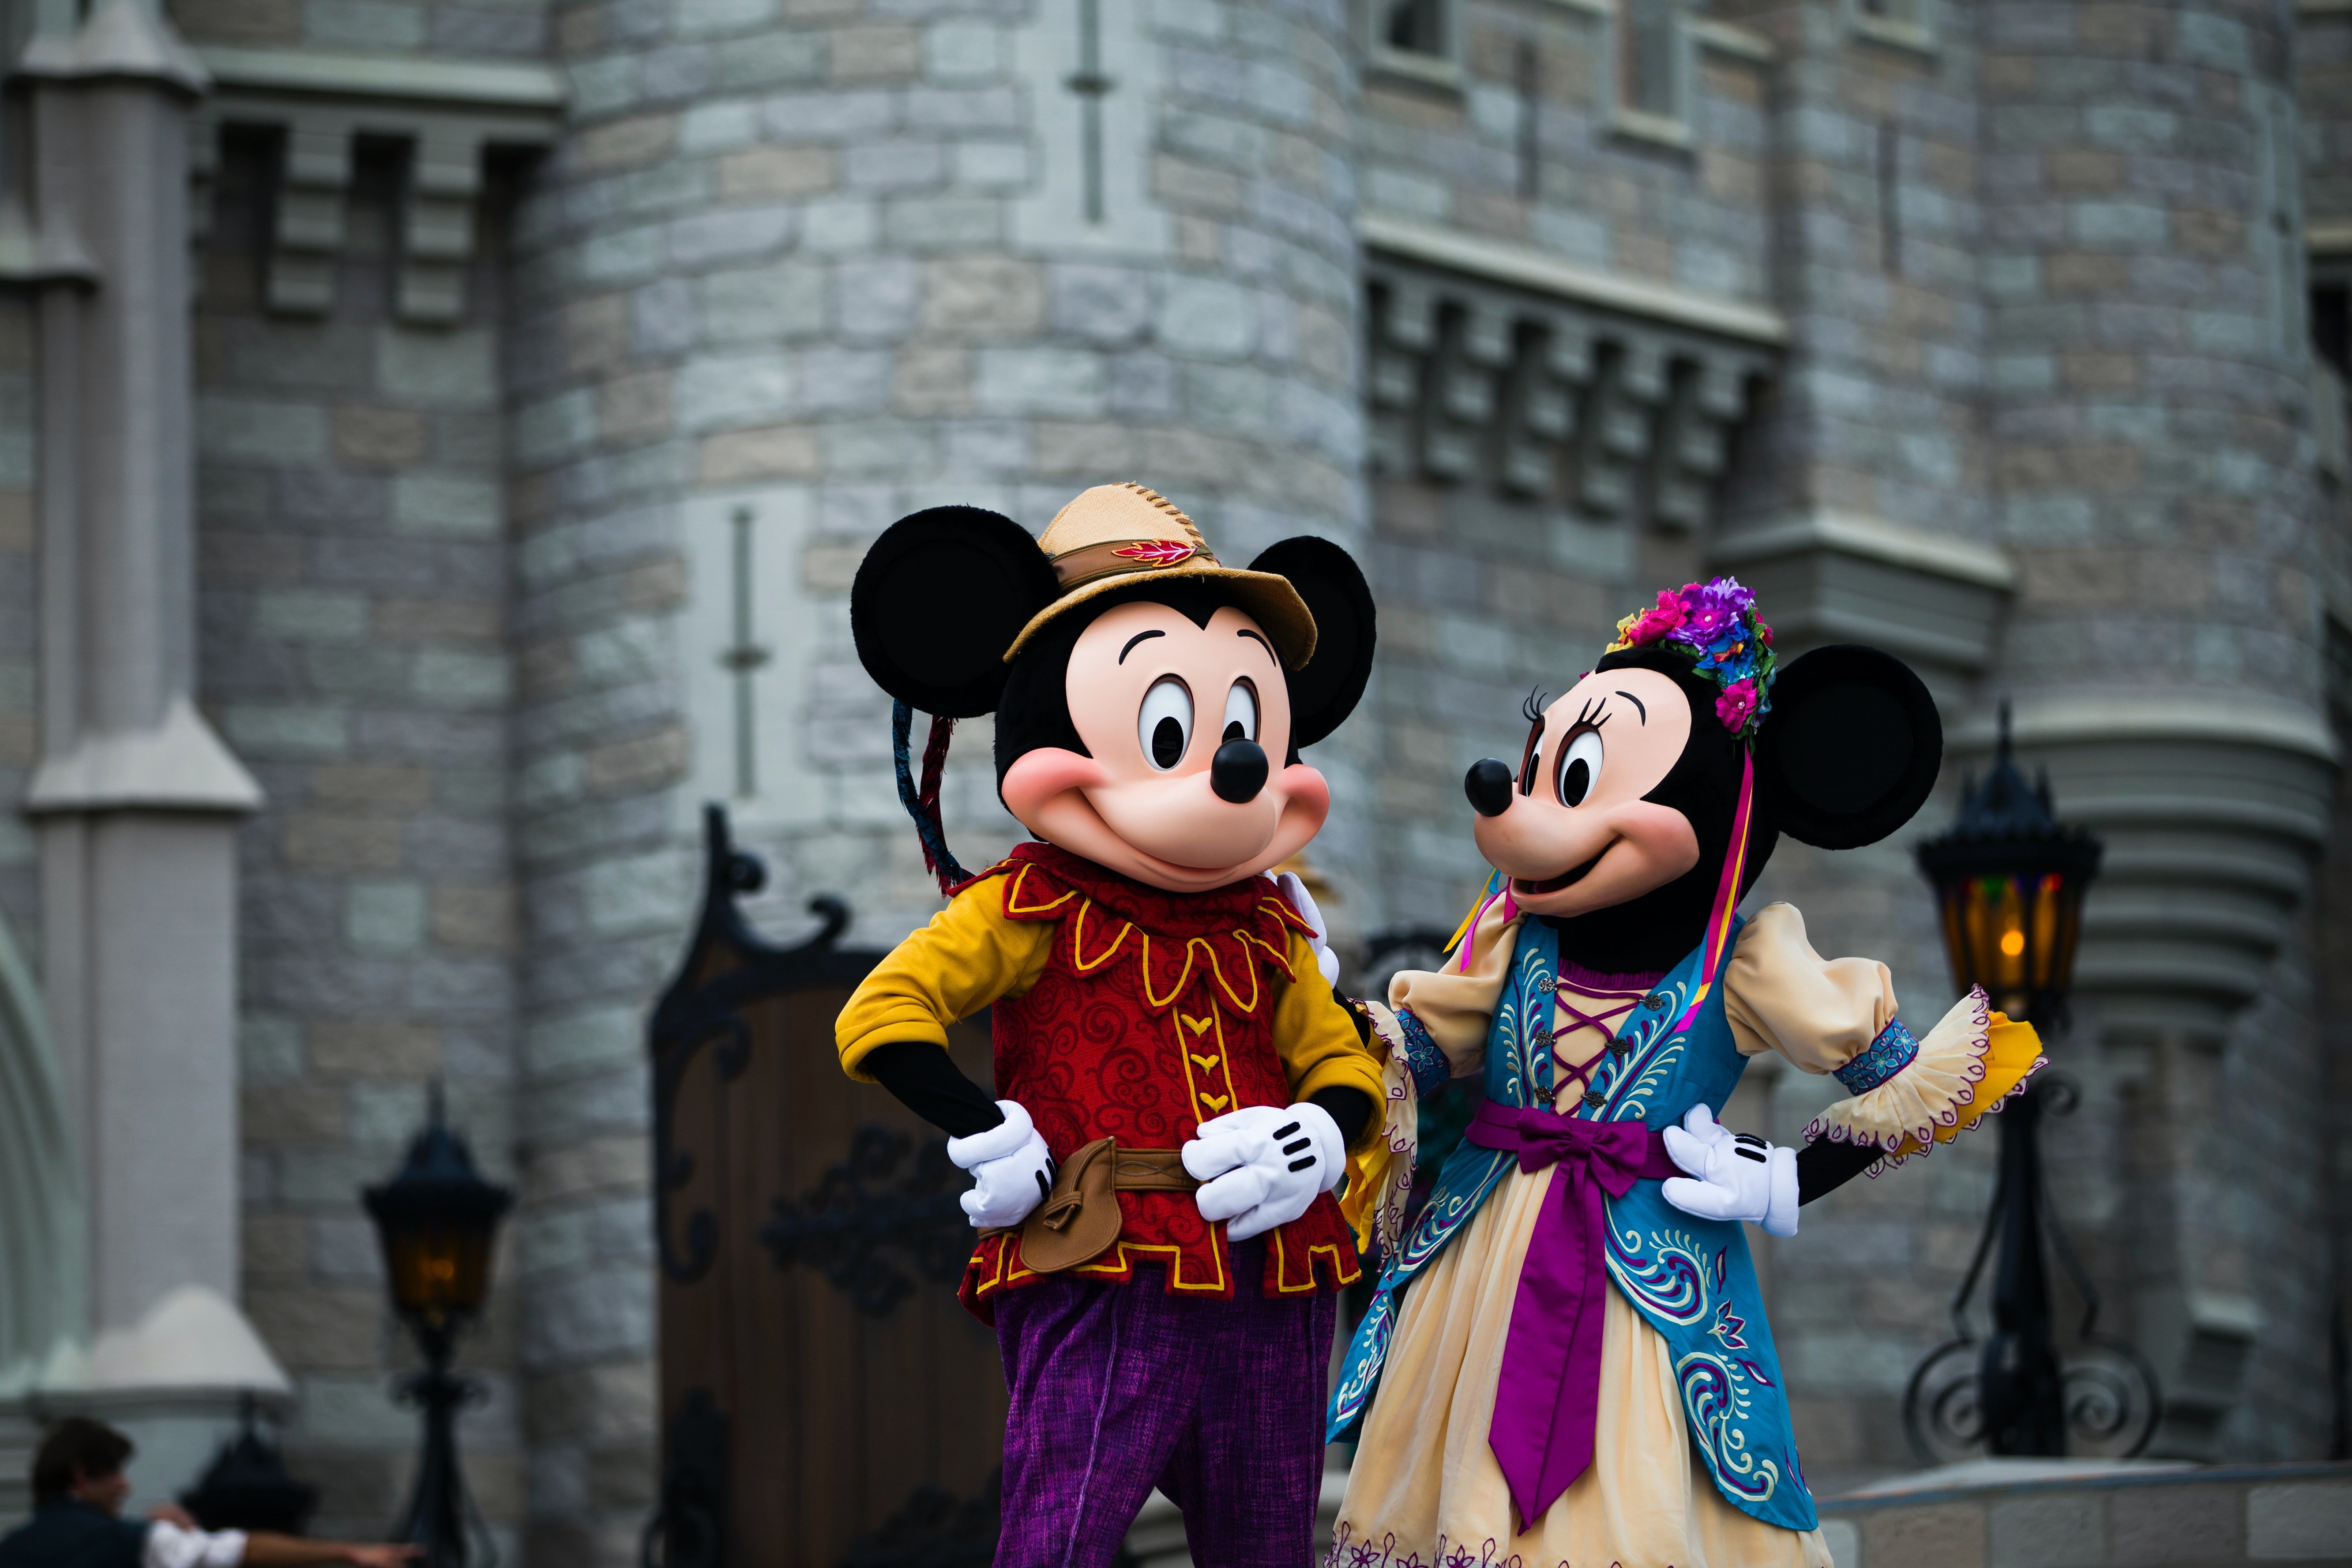 Robbie was thrilled to meet Mickey & Minnie at Disneyland. | Source: Pexels